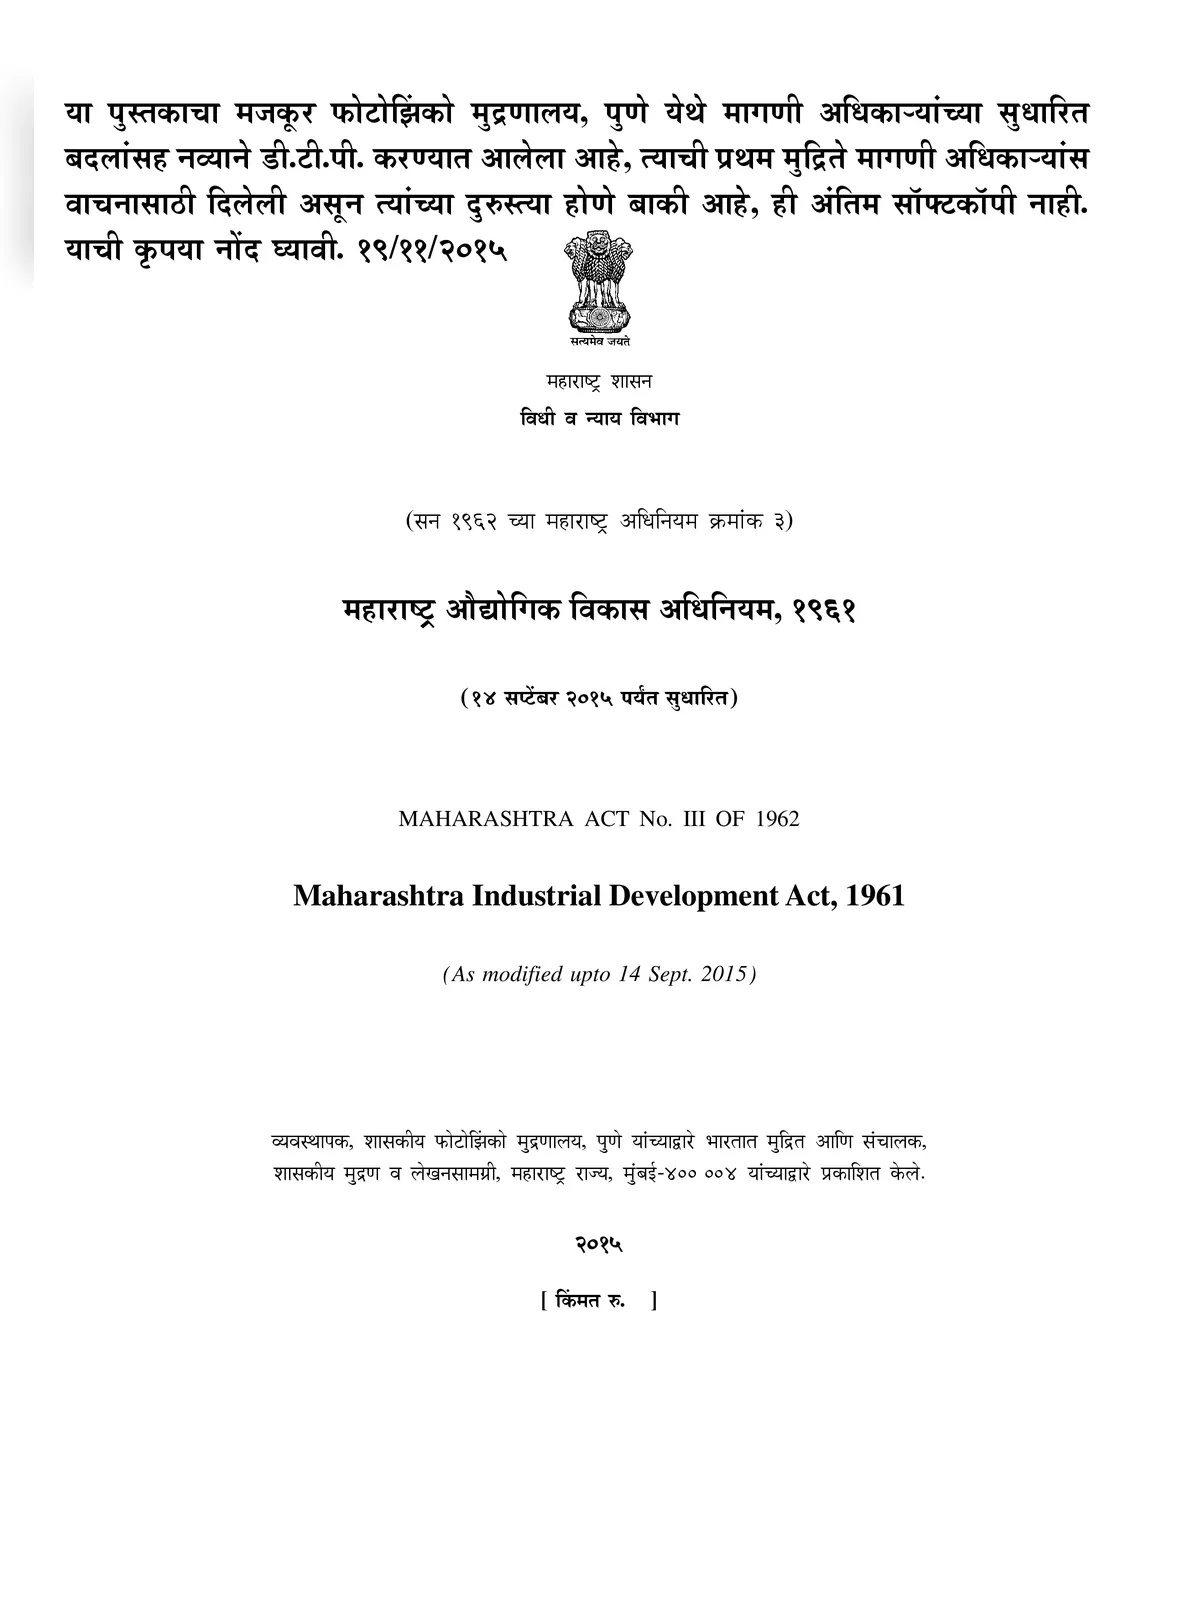 MIDC Act 1961 – महाराष्ट्र औद्योगिक विकास अधिनियम १९६१